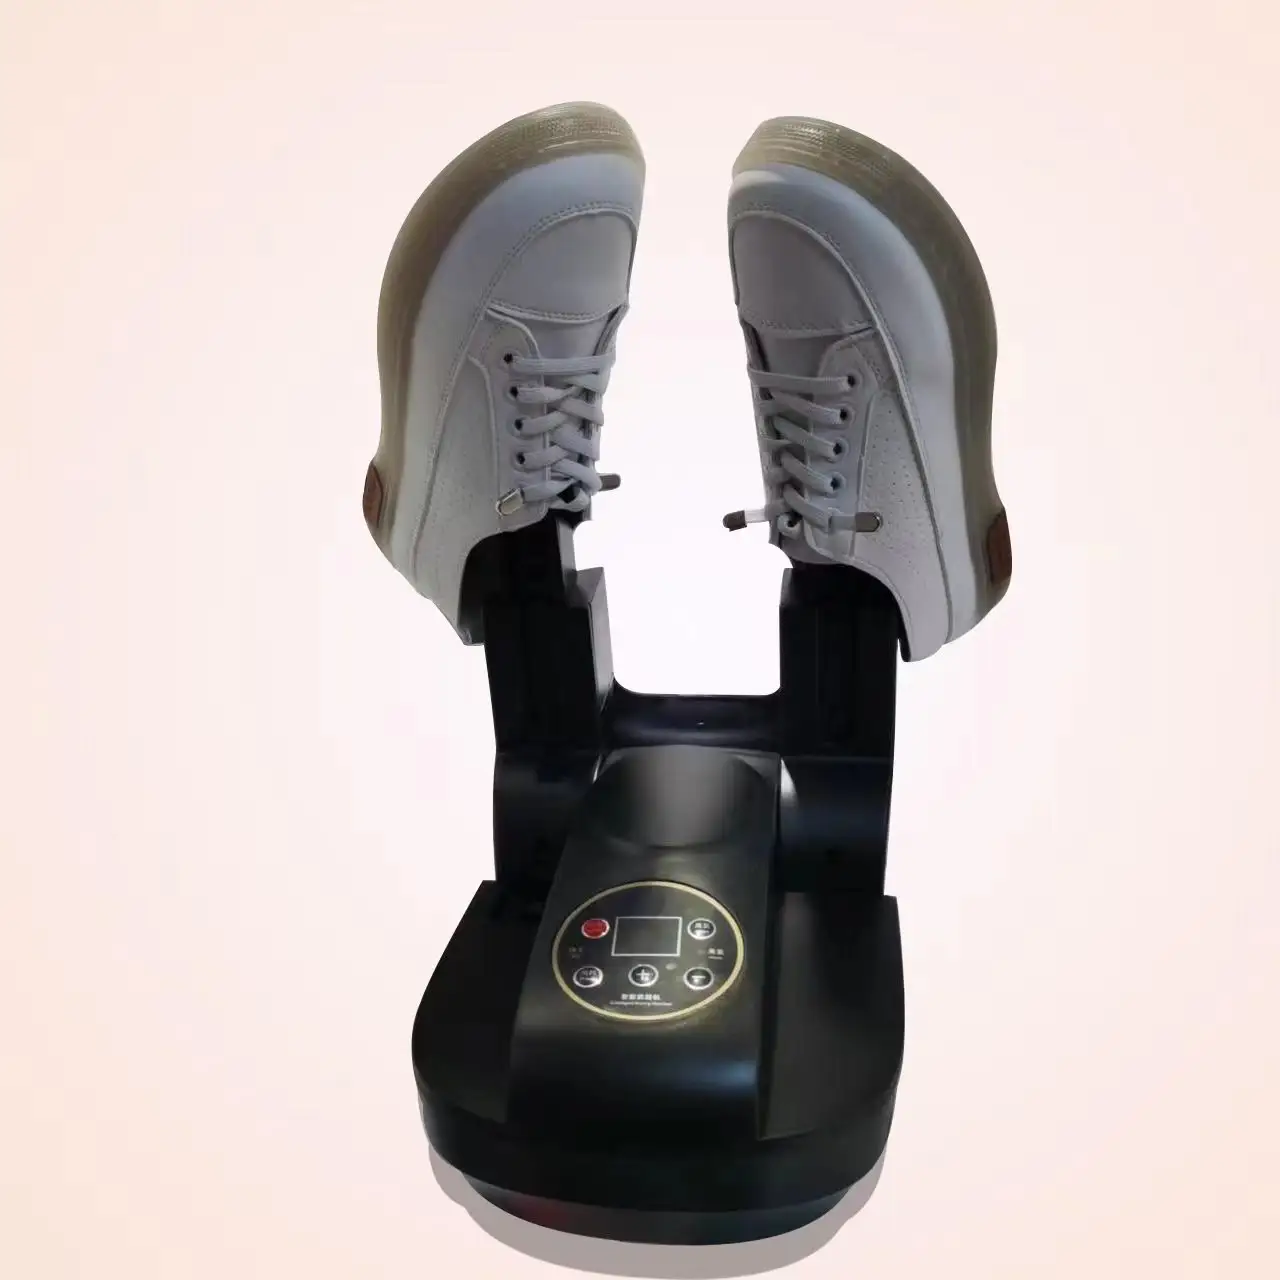 2022 Dryer Shoes portable adjustable Warmer electric smart shoe dryer electric shoes dryer machine With Deodorizer